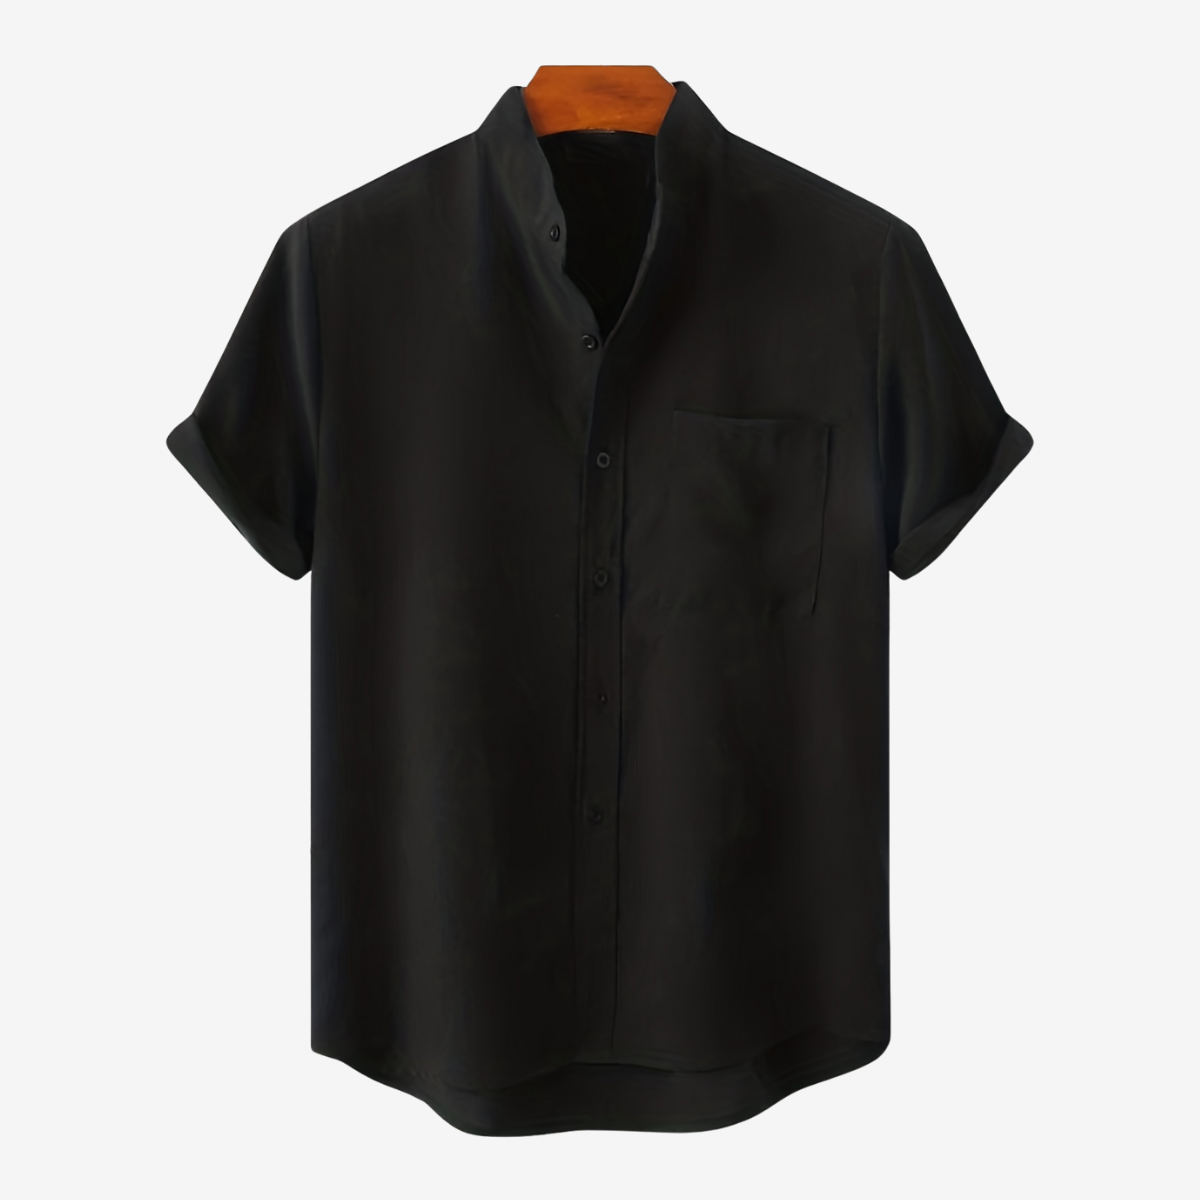 Noemi - Men's linen blend shirt